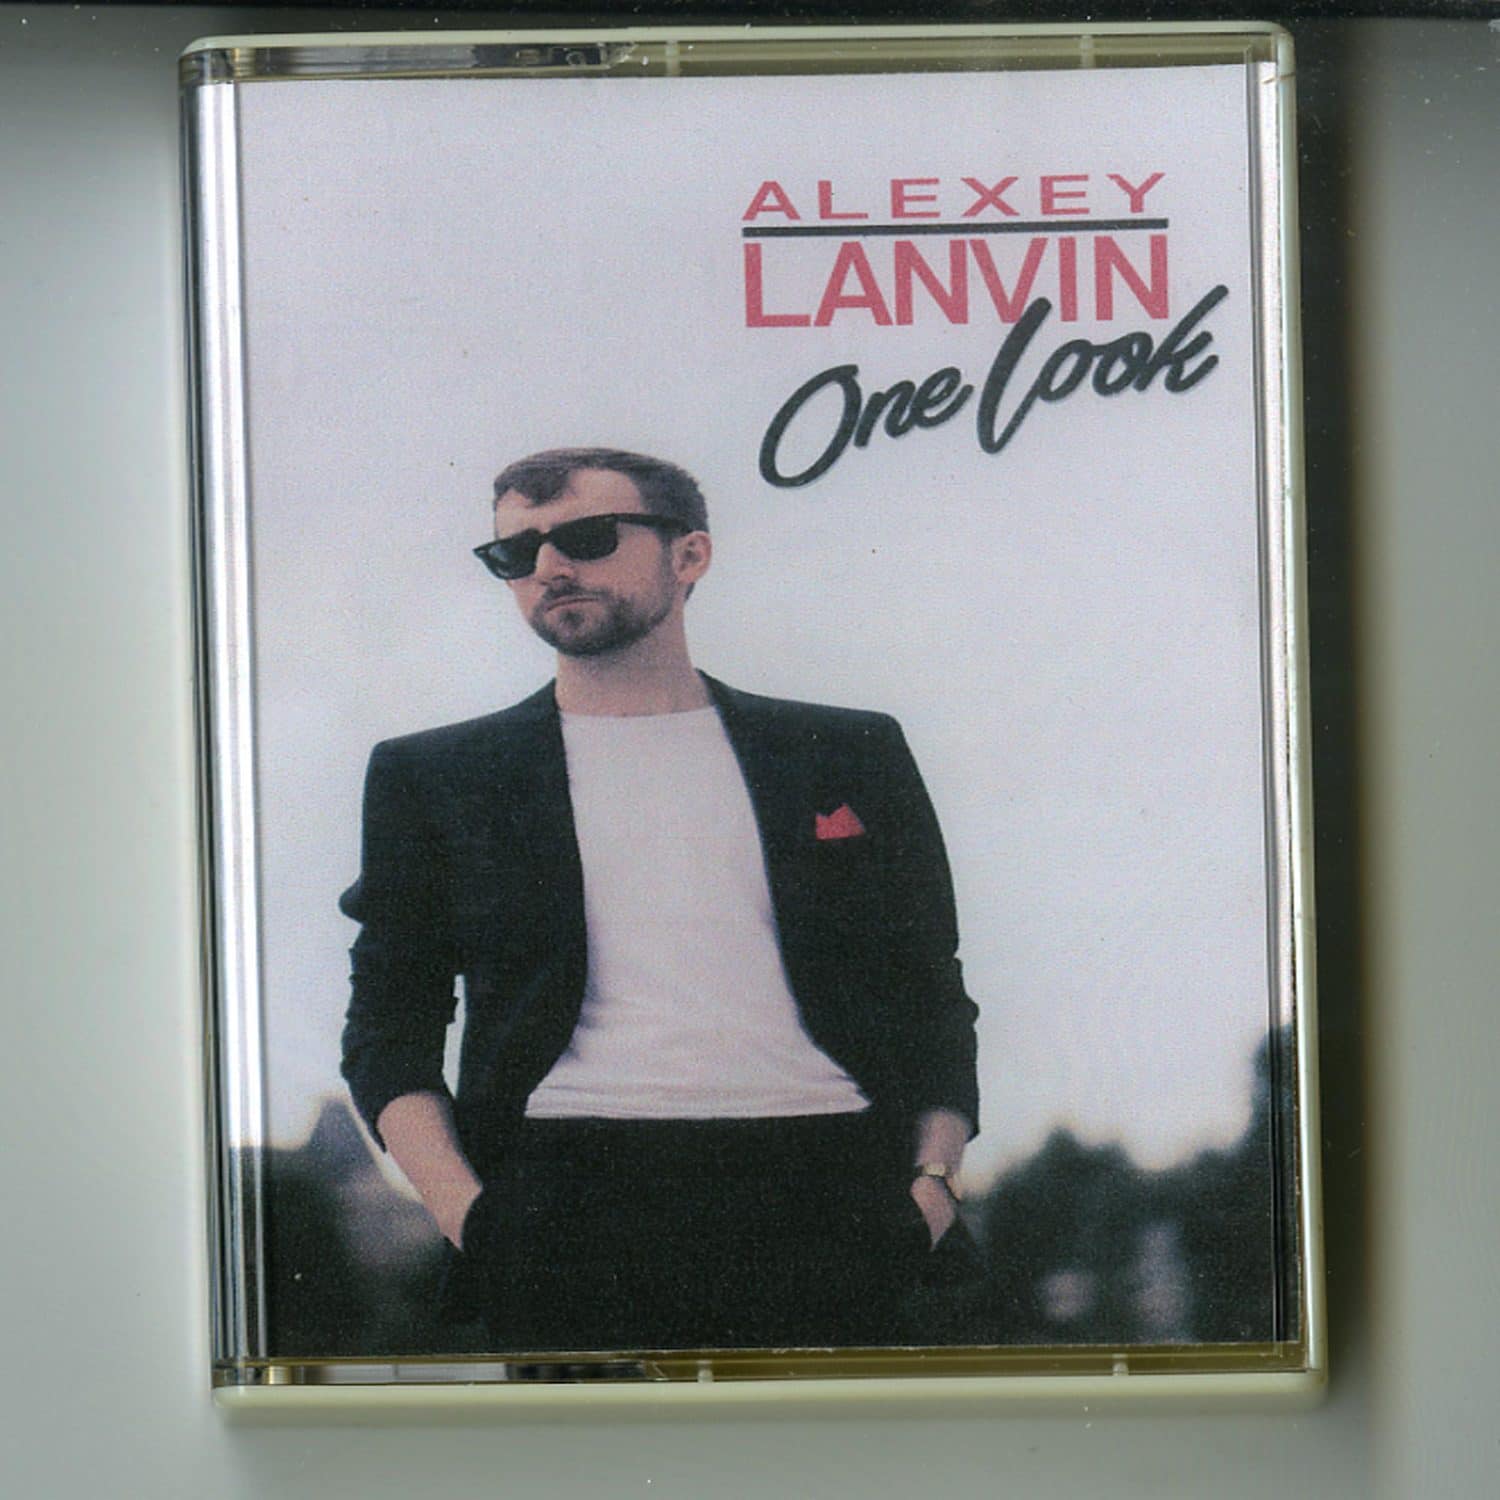 Alexey Lanvin - ONE LOOK 